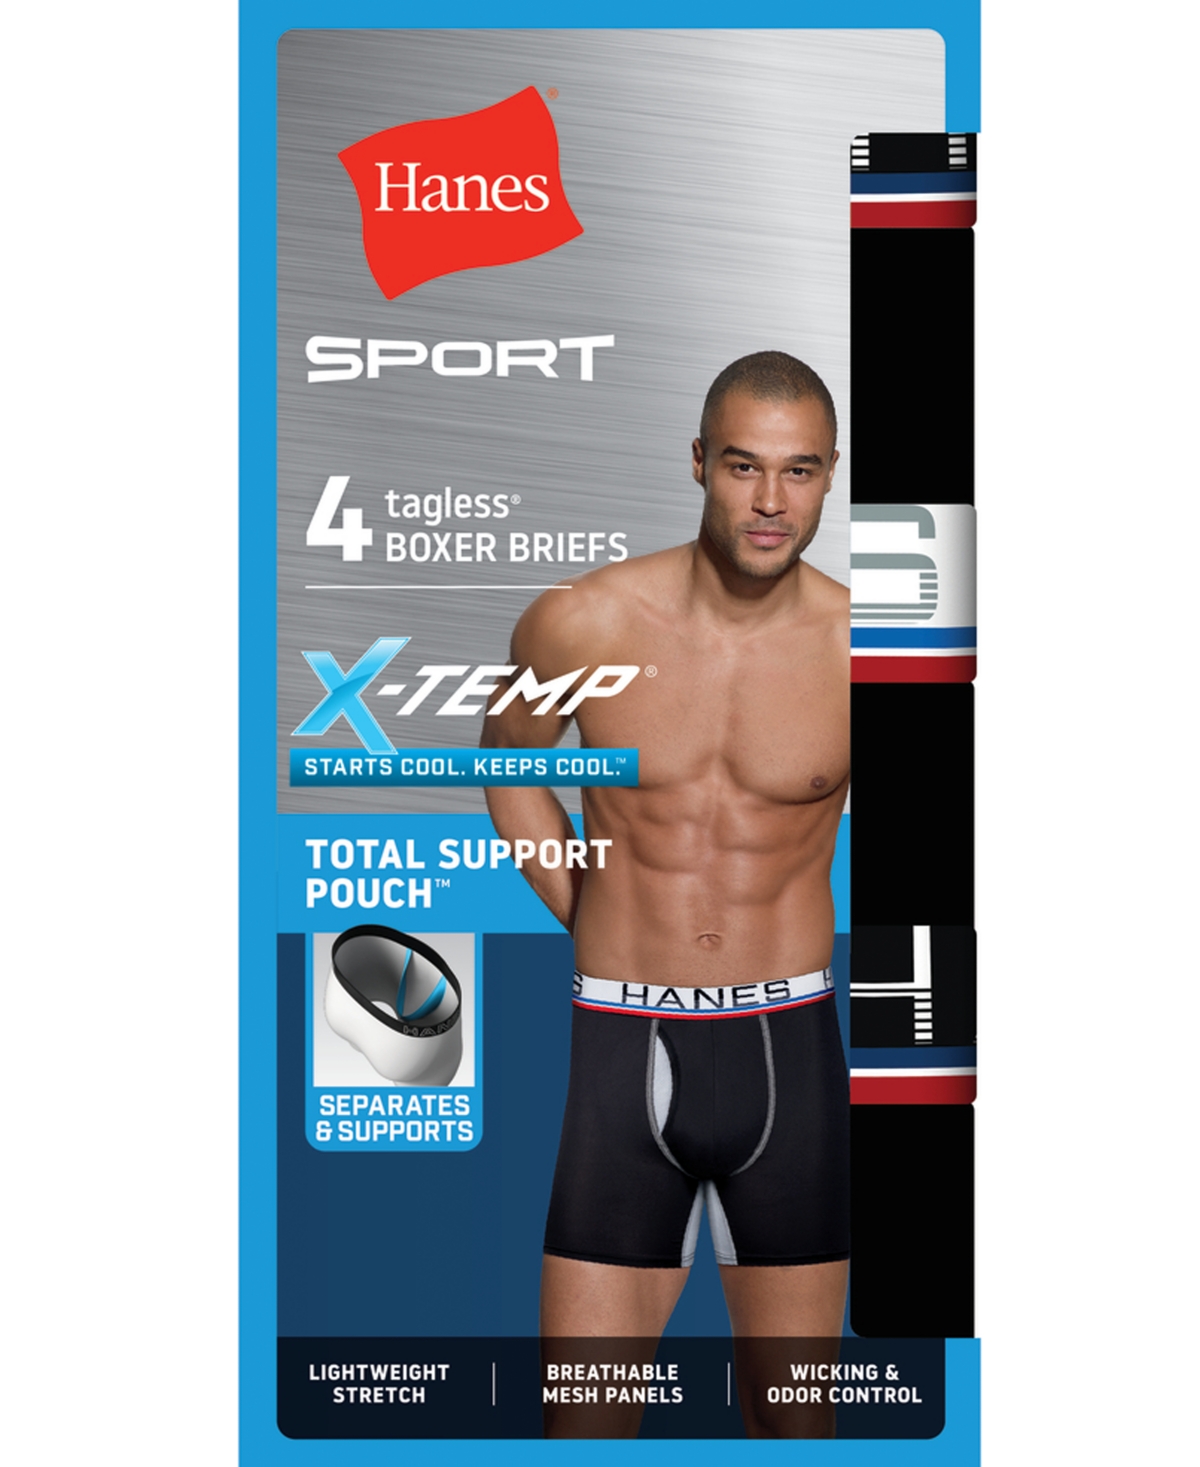 Hanes Men's 3-Pk. Ultimate Comfort Flex Fit Stretch Woven Boxers